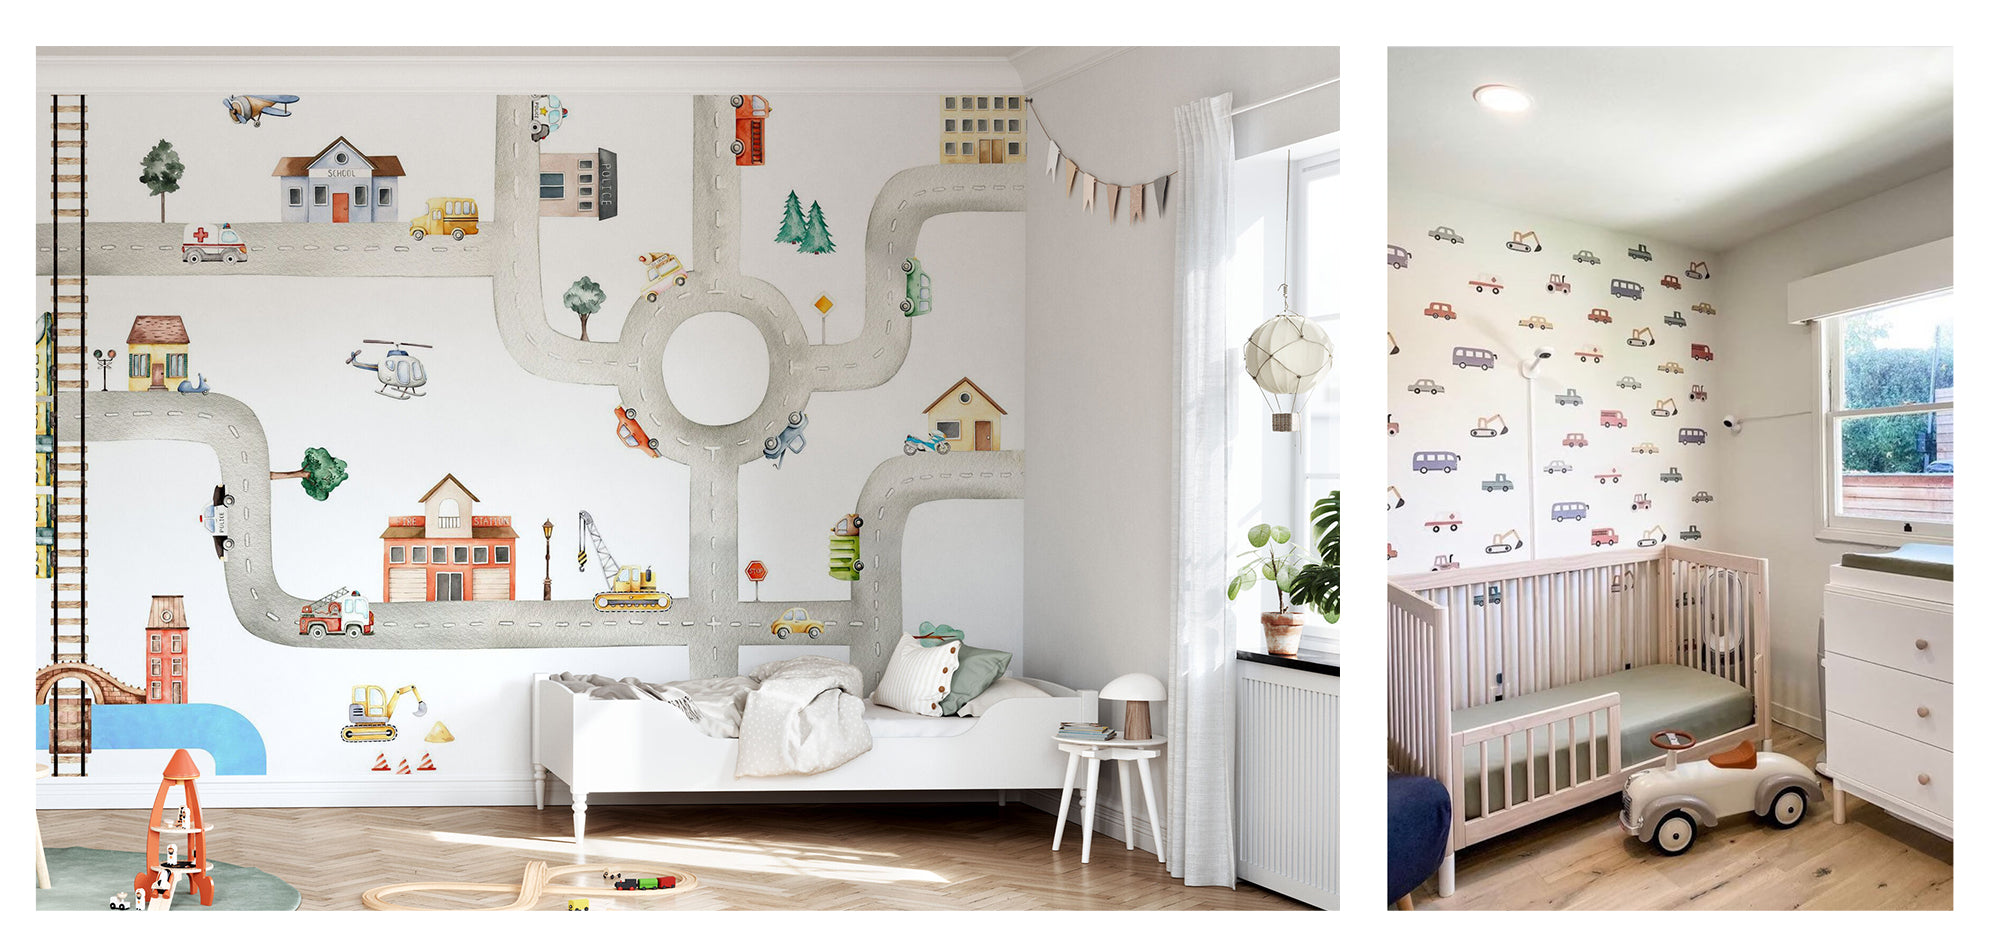 cat-themed wallpaper ideas for boys' nursery